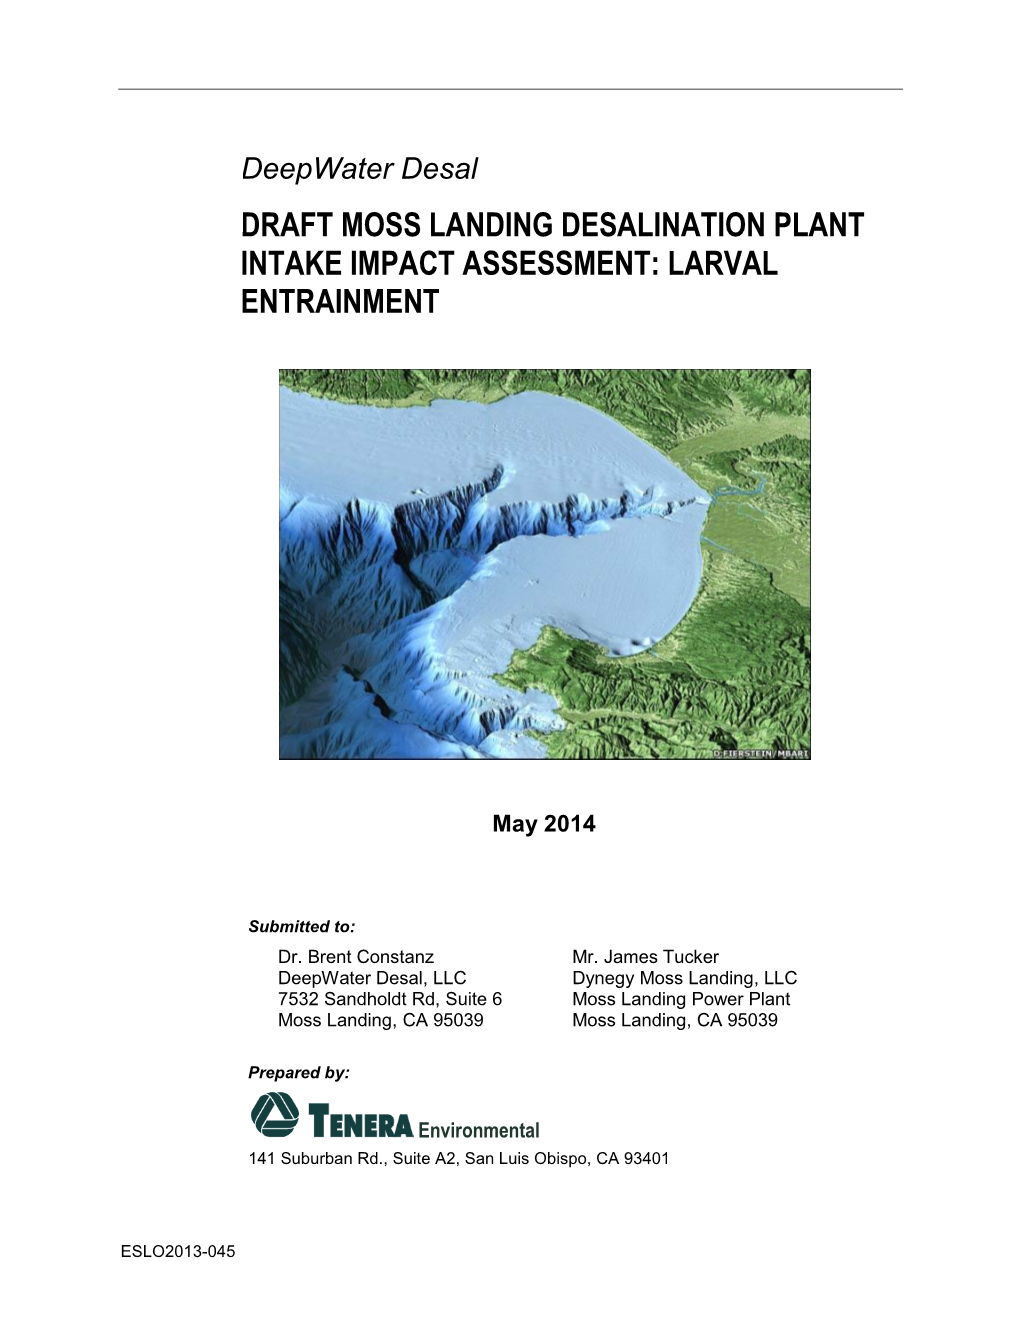 Draft Moss Landing Desalination Plant Intake Impact Assessment: Larval Entrainment